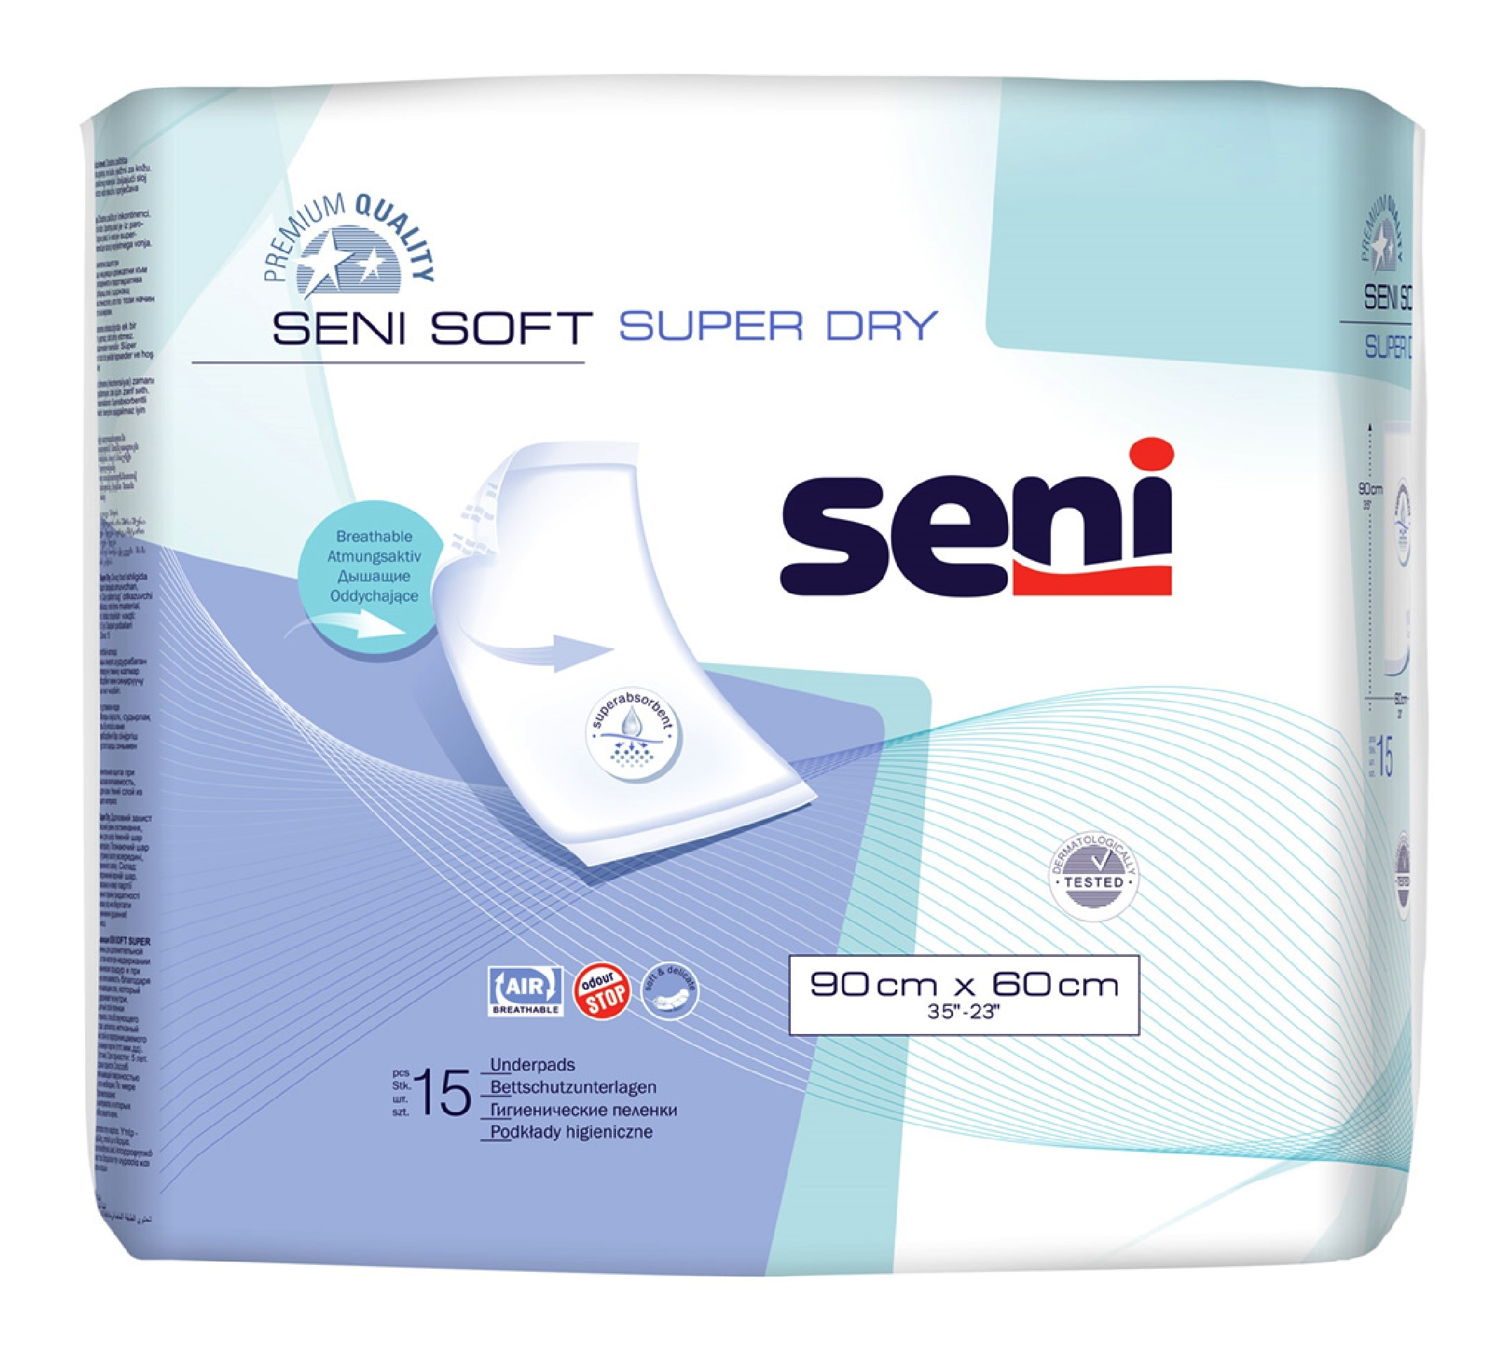 Seni Soft Super Dry 90x60cm - 4 x 15 Stk.